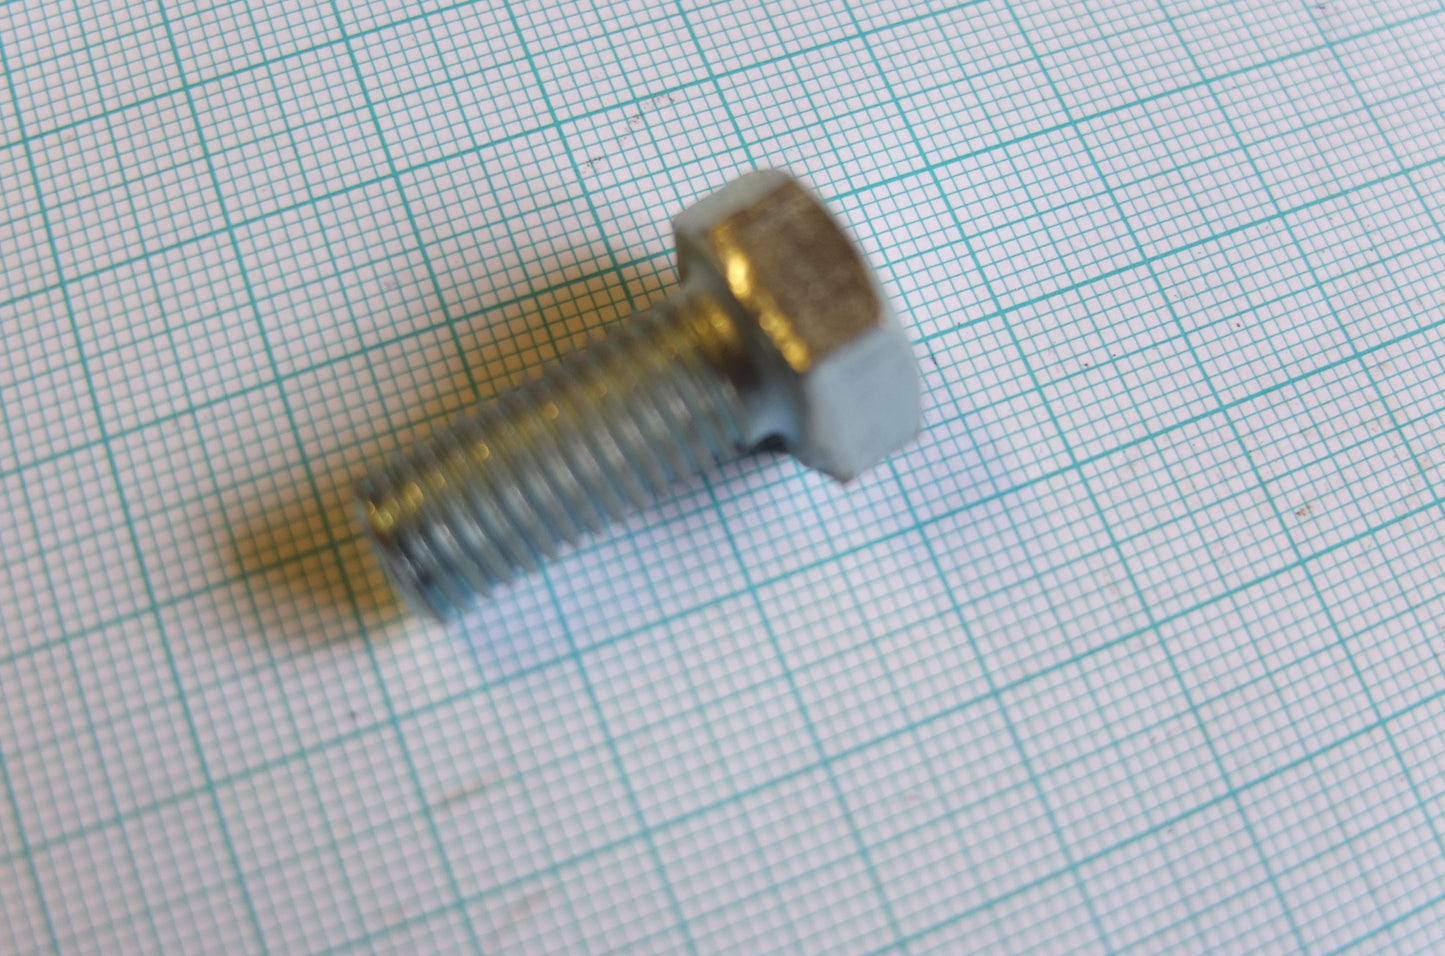 P9/006 clamp pinch bolt